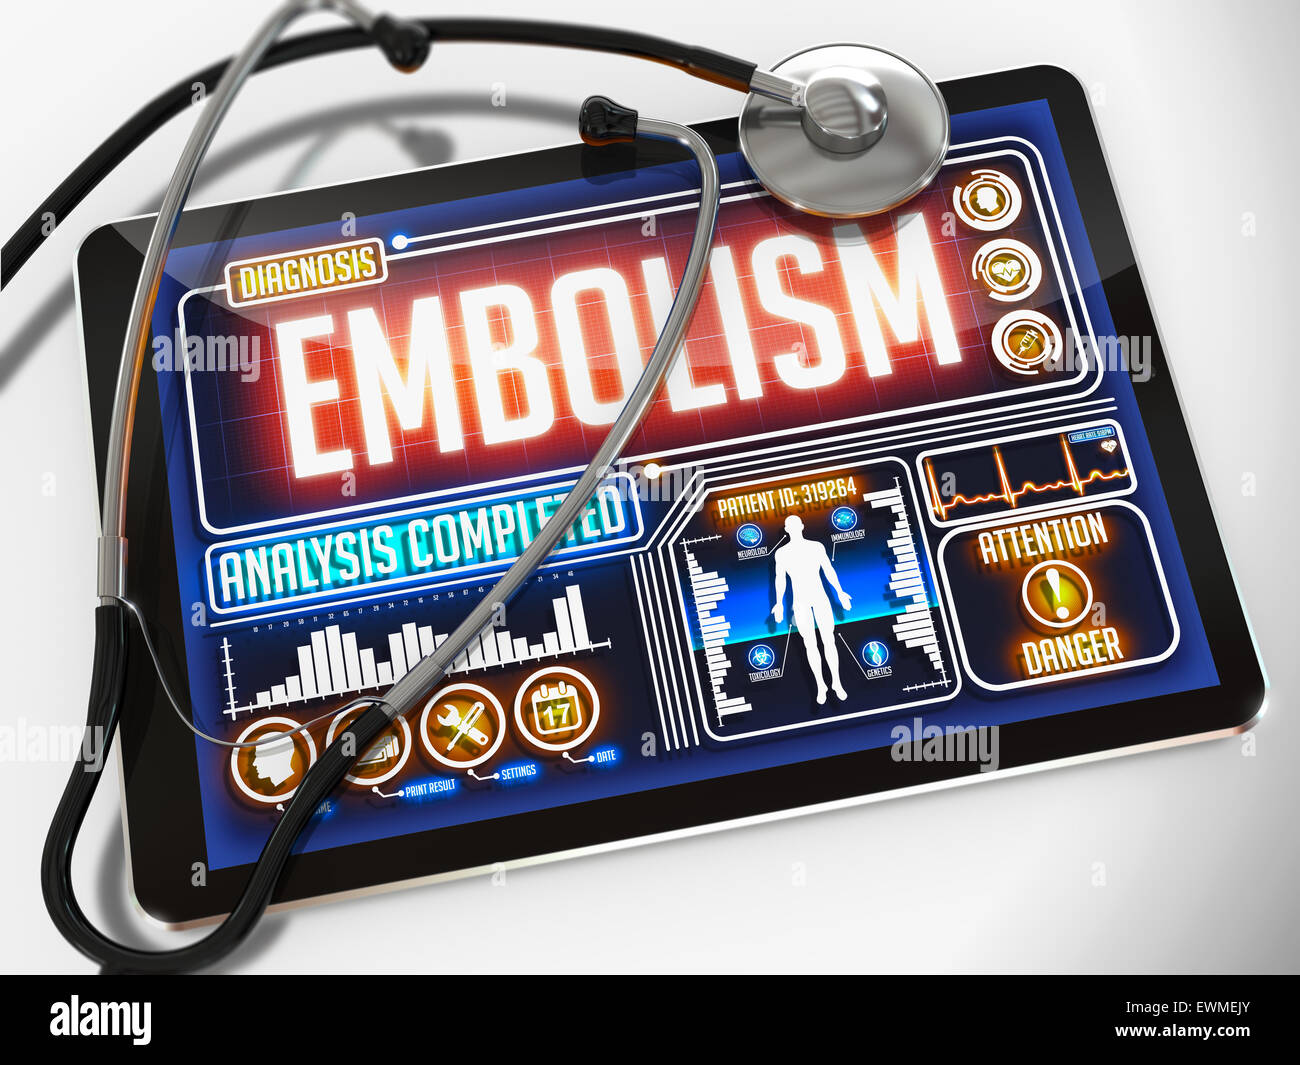 L'embolia sul display del Medical Tablet. Foto Stock